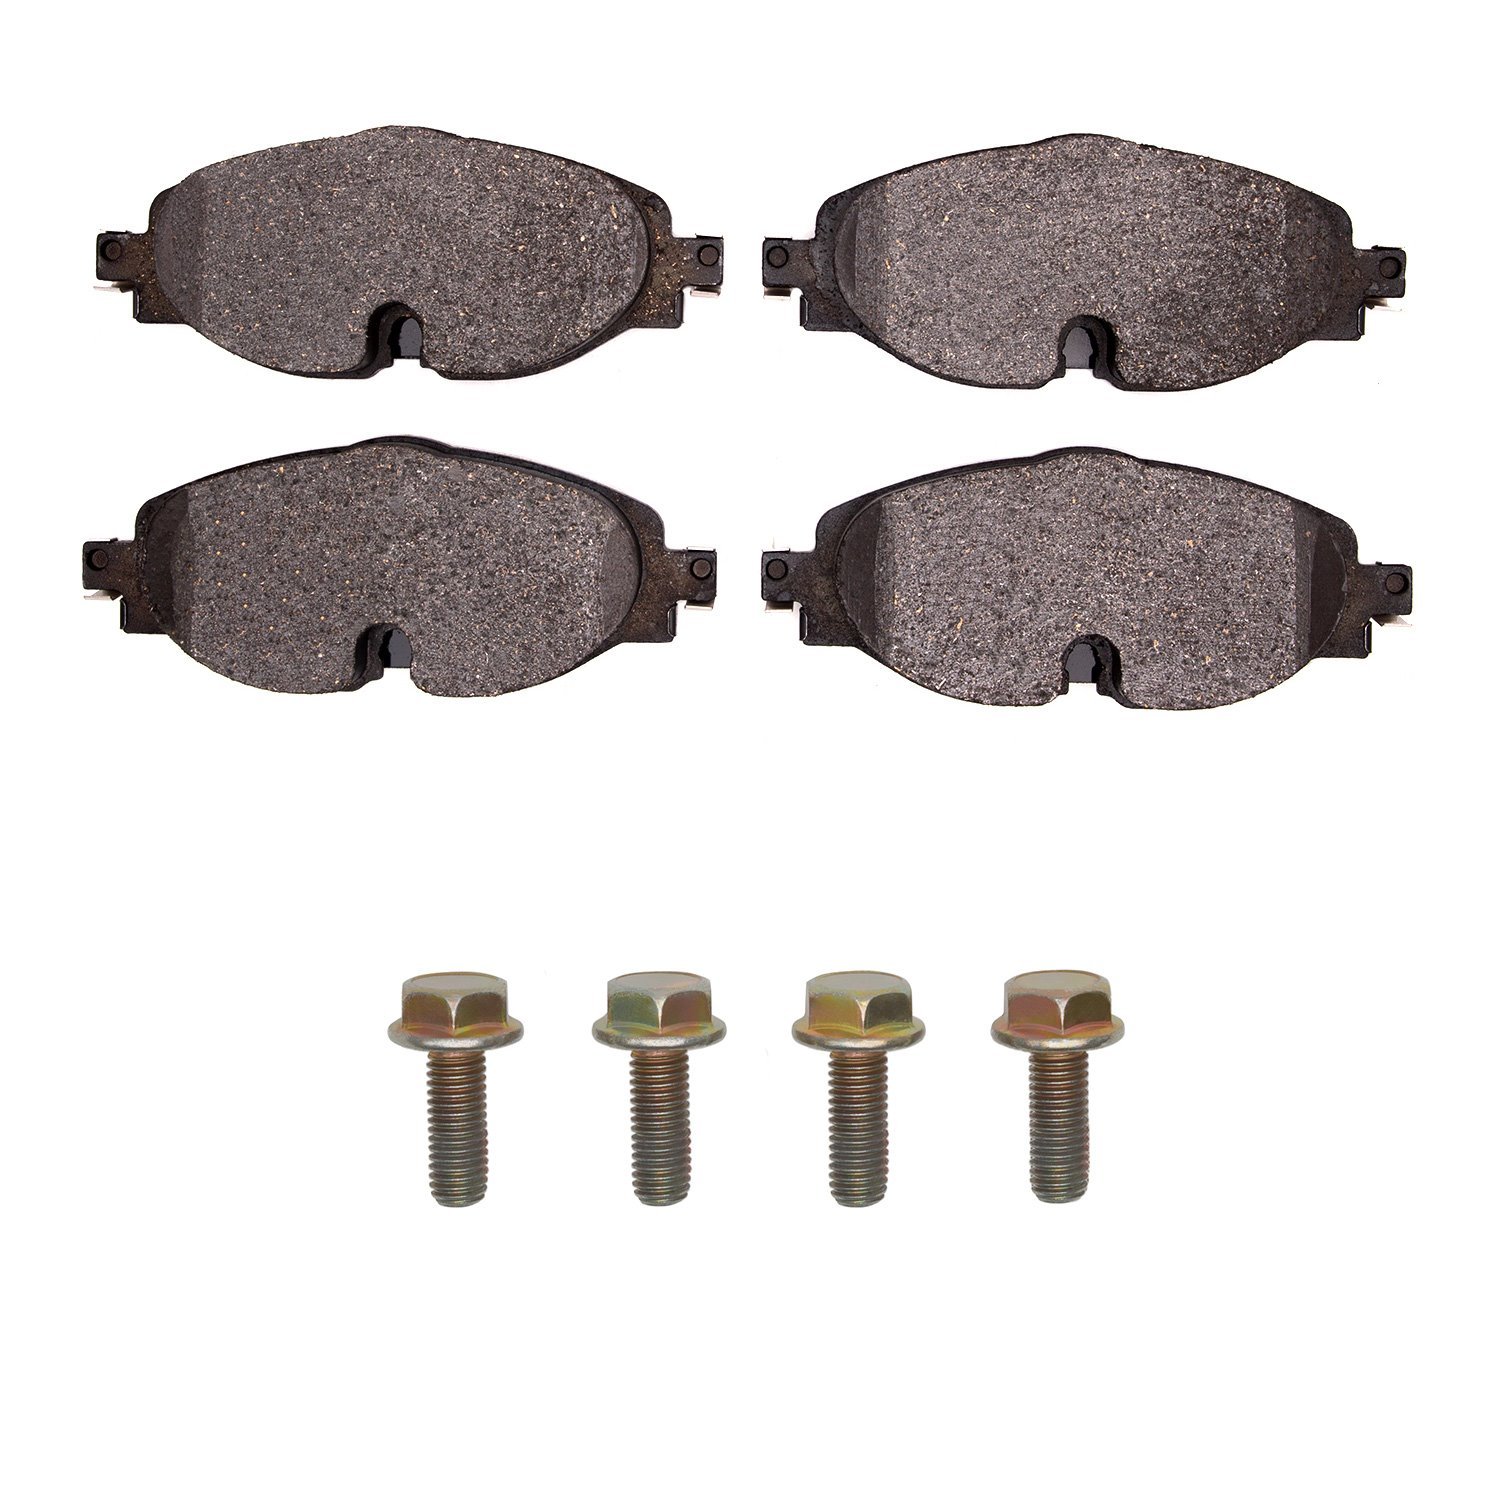 1310-1760-01 3000-Series Ceramic Brake Pads & Hardware Kit, Fits Select Multiple Makes/Models, Position: Front